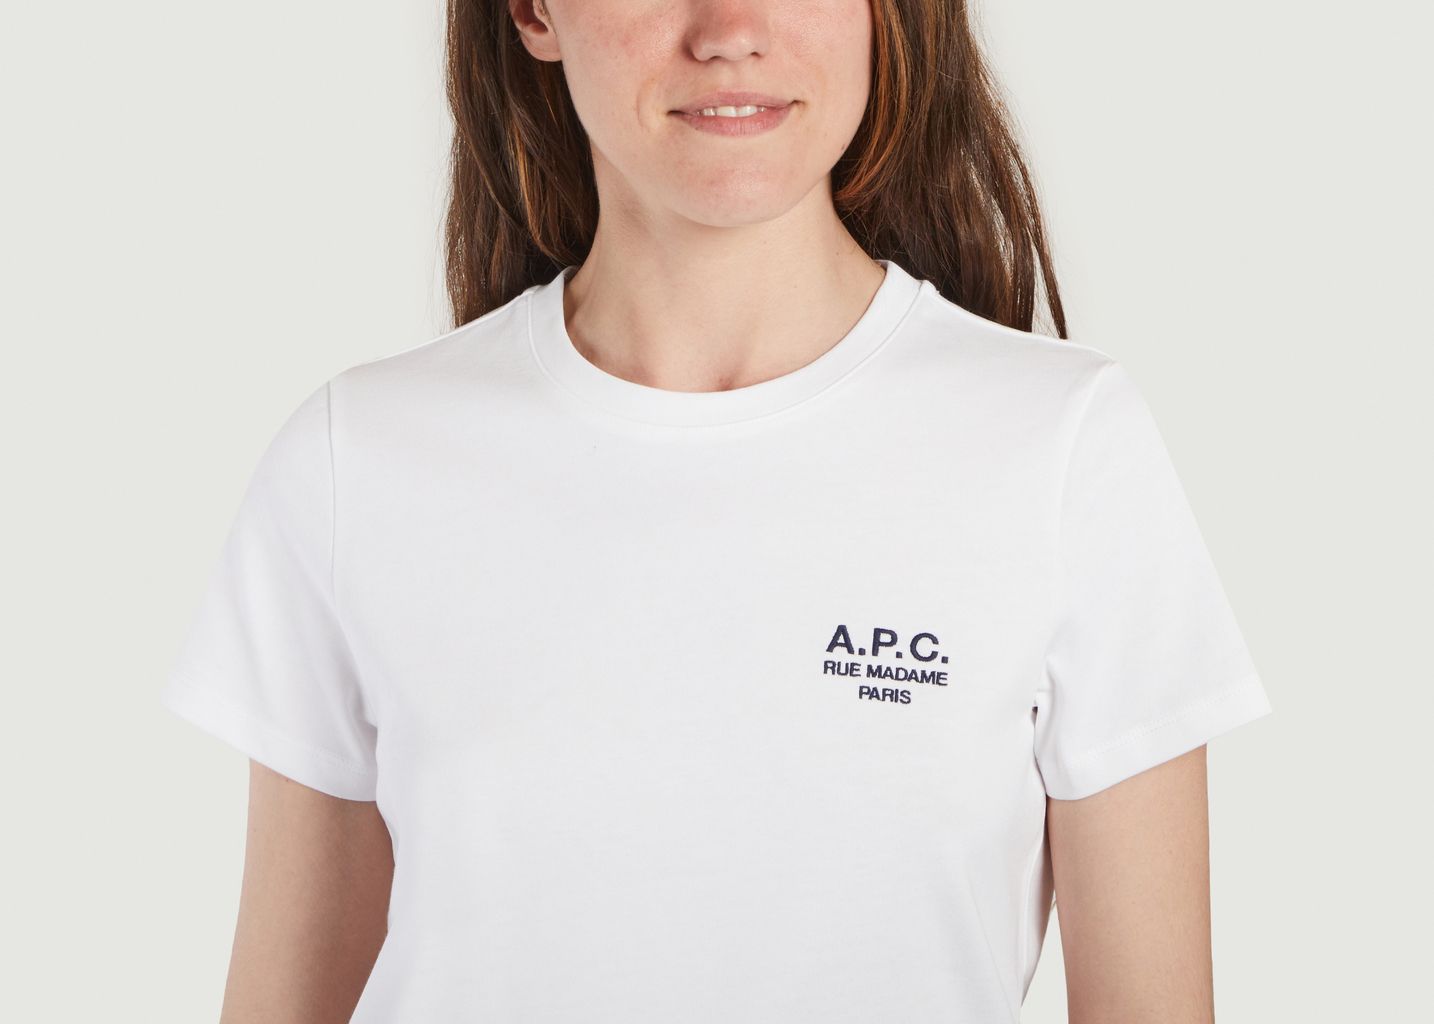 Denise T-shirt with Denise logo - A.P.C.